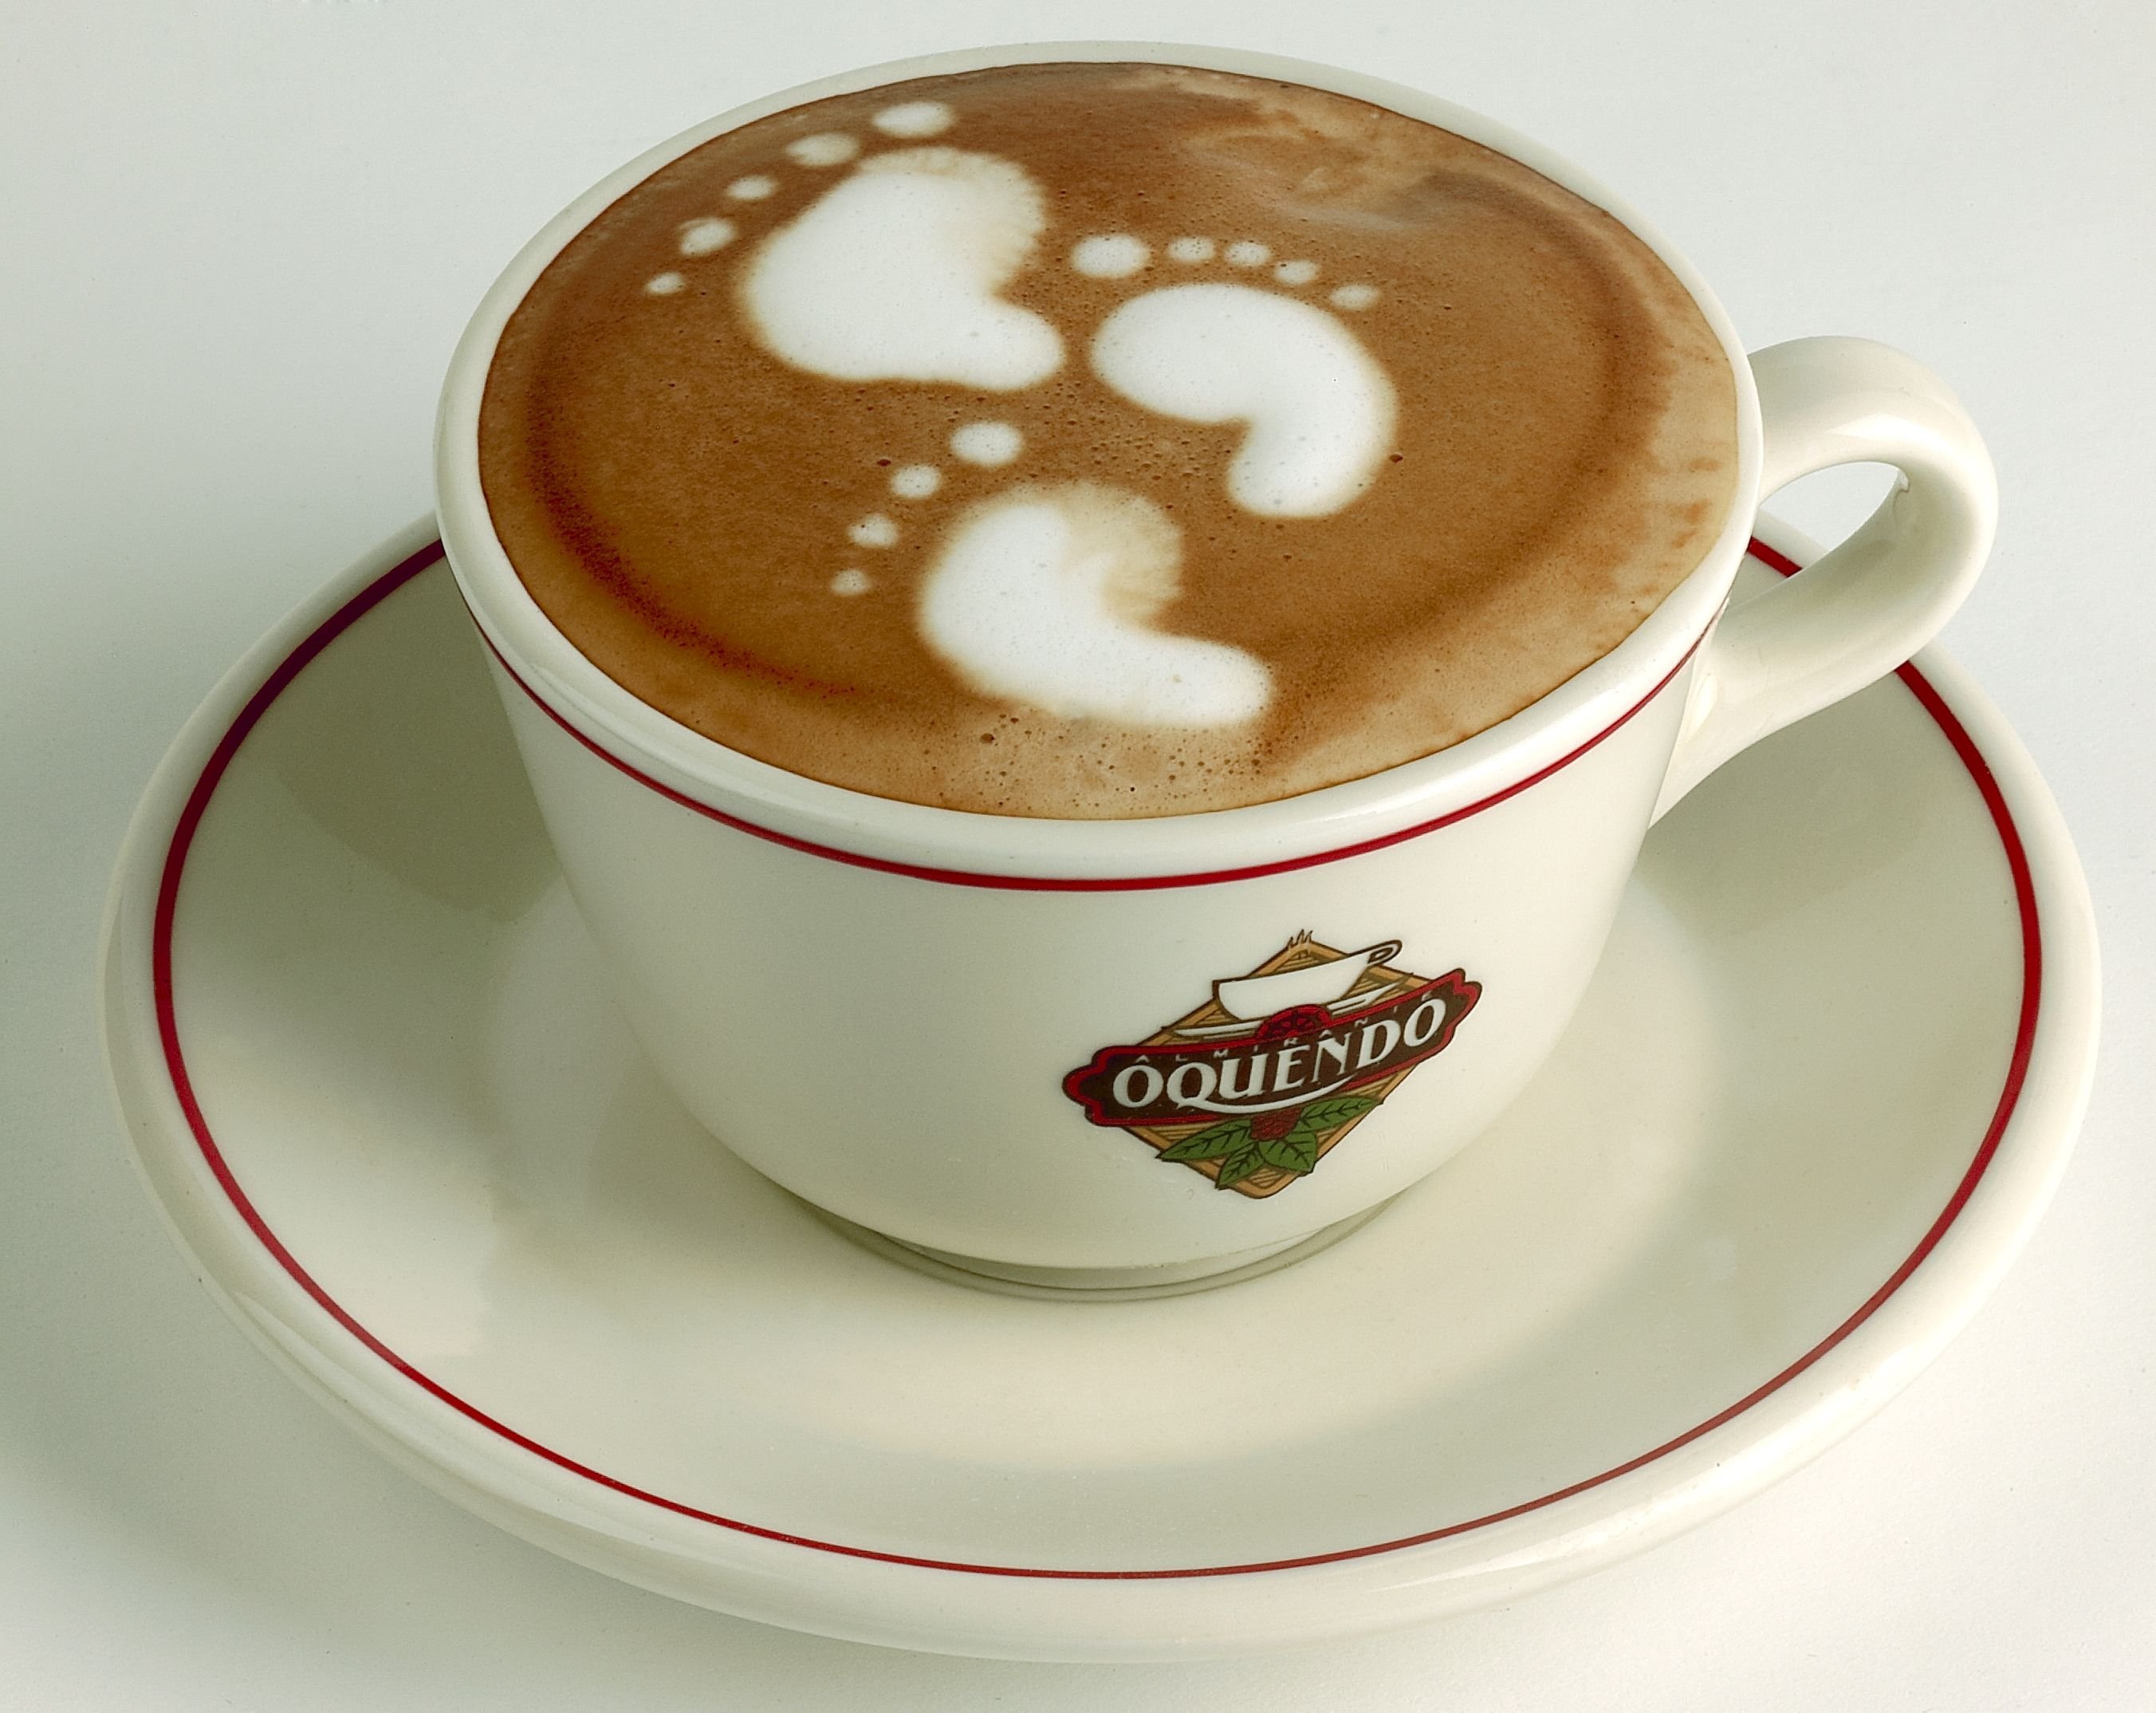 There is coffee in the cup. Капучино латте арт. Кофе рисунок. "На чашечку кофе…?!". Красивый кофе.